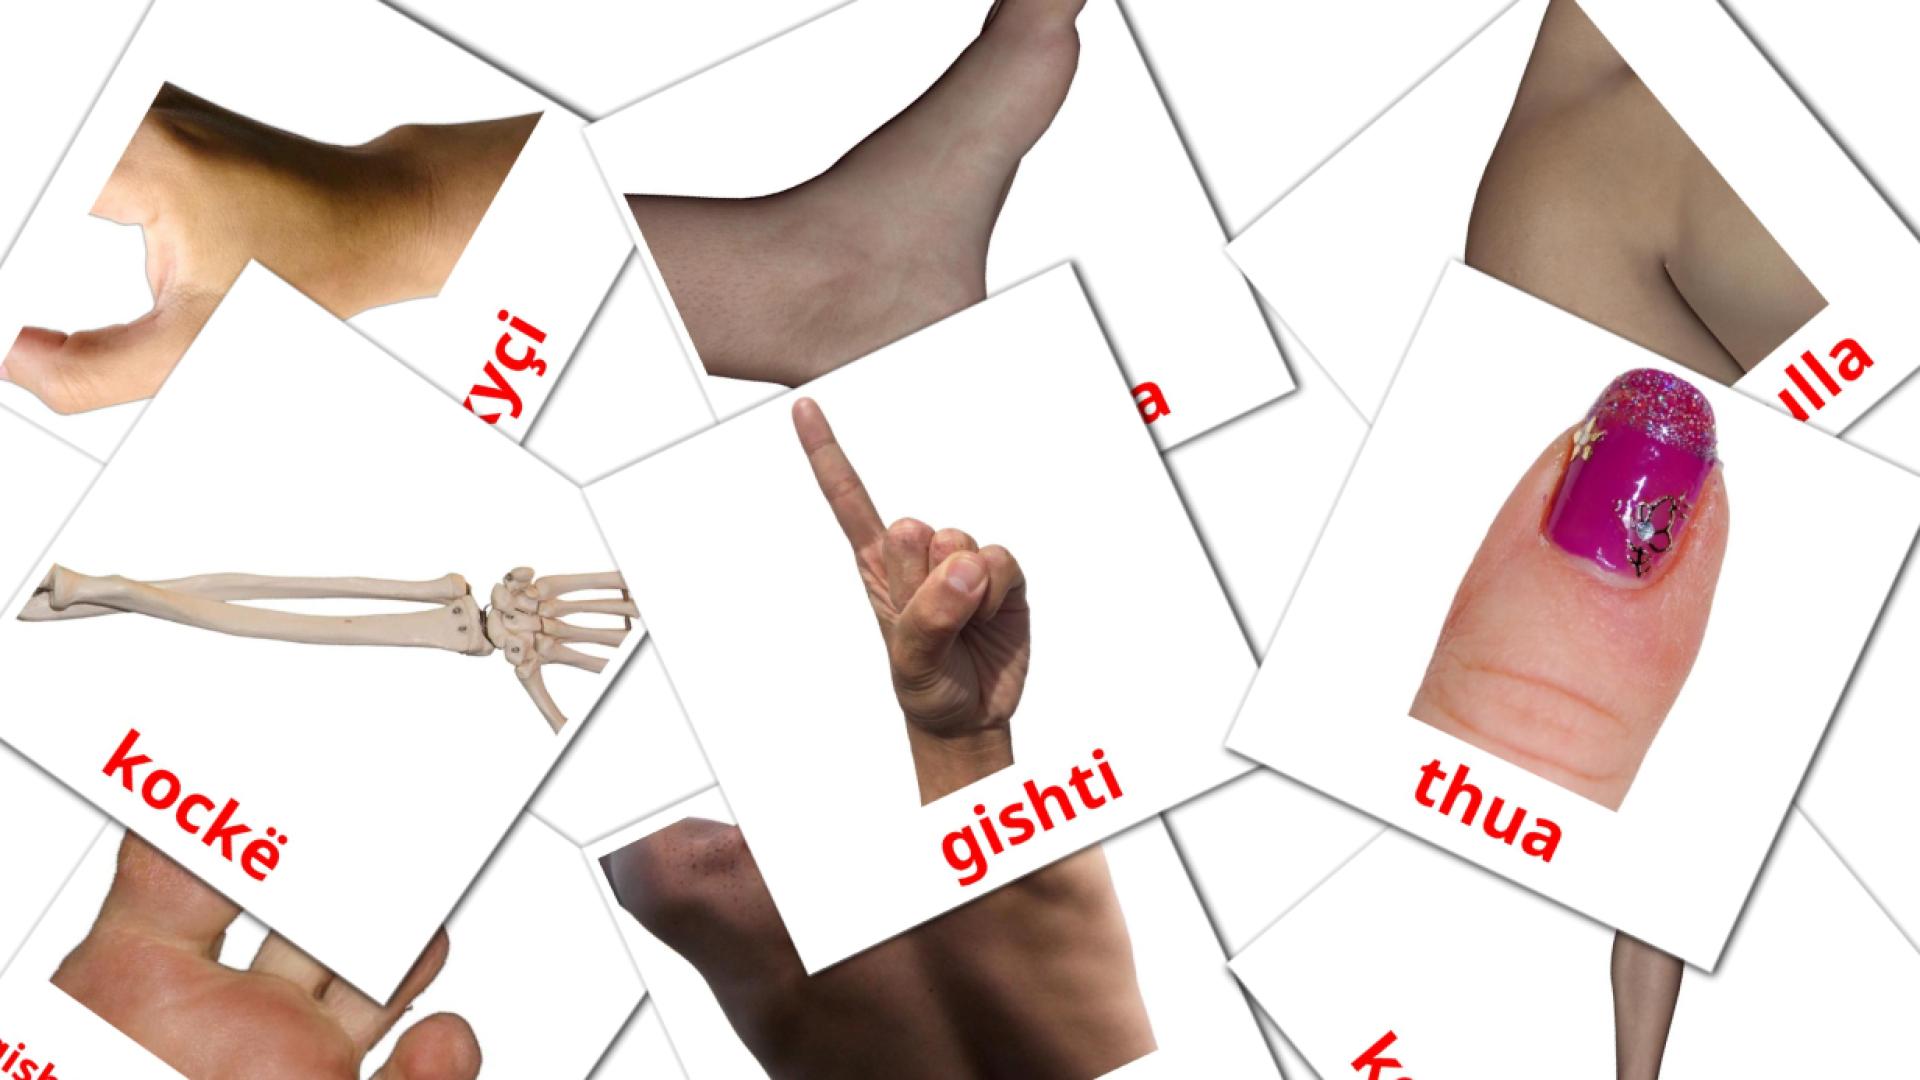 Body Parts - albanian vocabulary cards